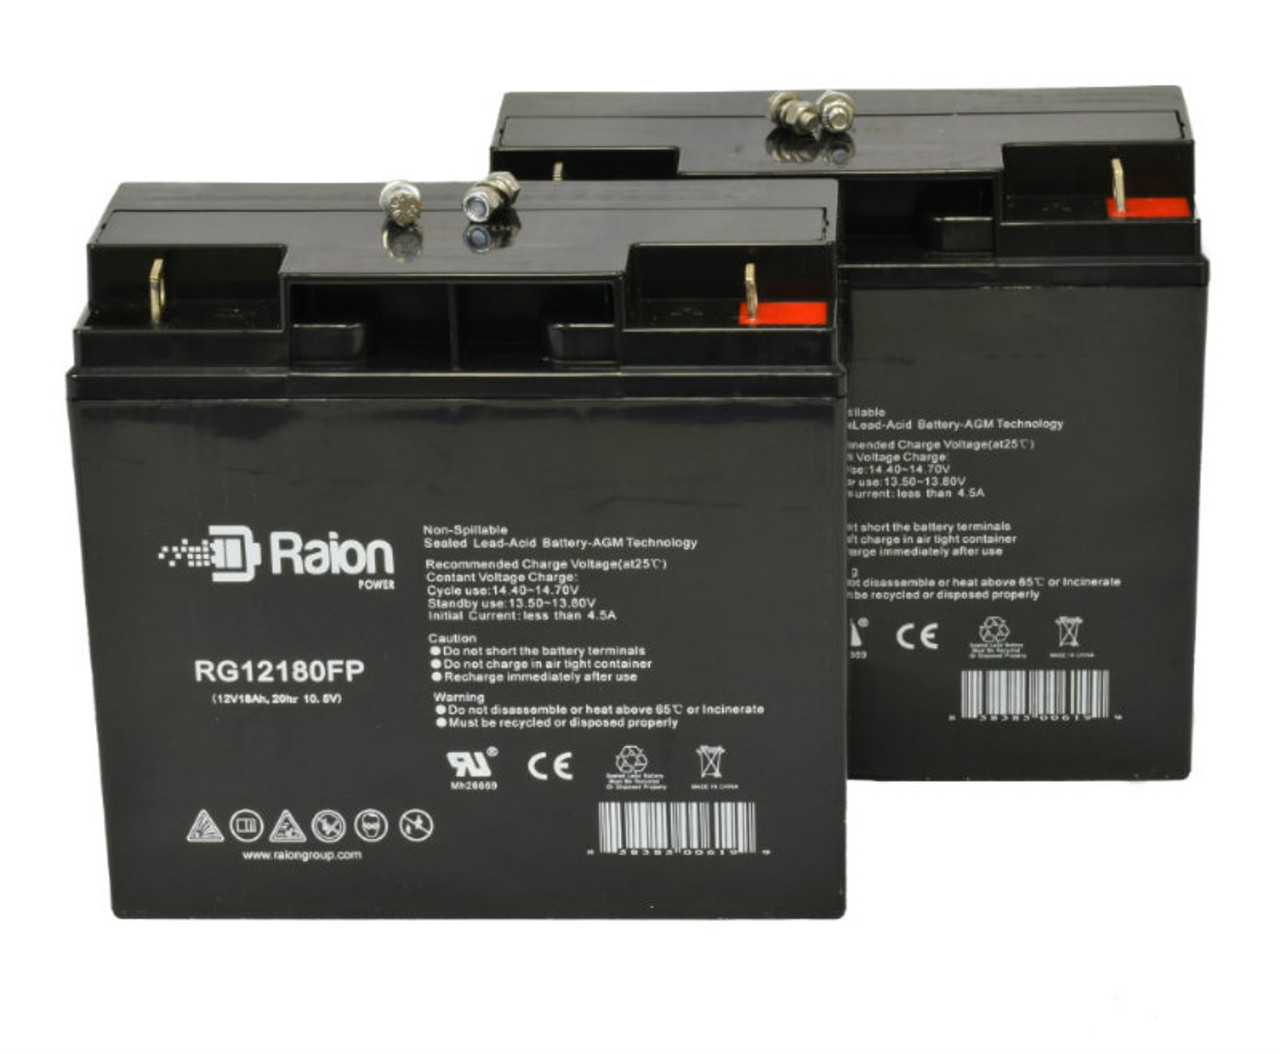 Raion Power Replacement RG12180FP 12V 18Ah Emergency Light Battery for Teledyne Big Beam H2RQ12S15 - 2 Pack